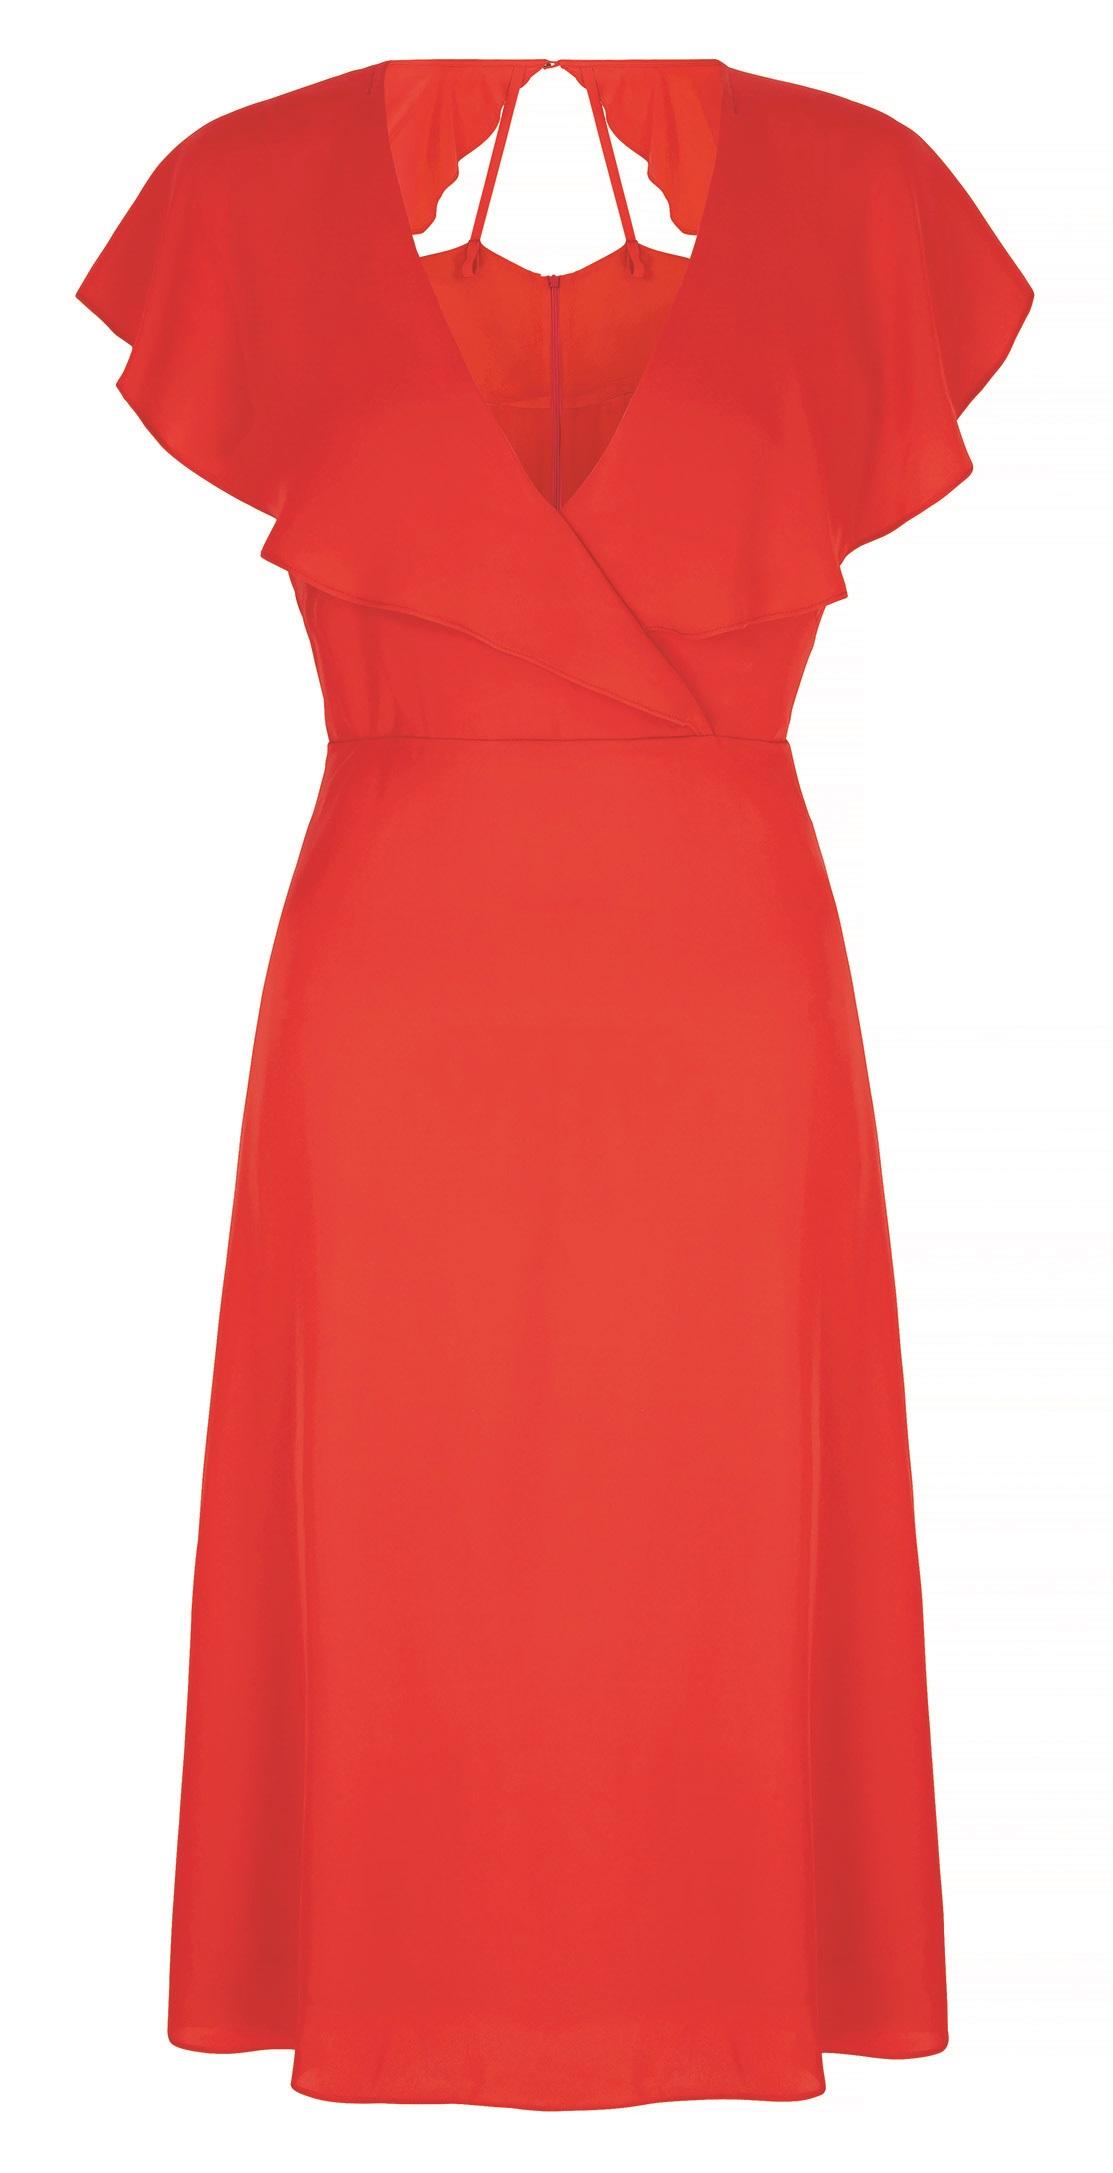 Very.co.uk, Rochelle Humes Ruffle Front Midi Dress, £59